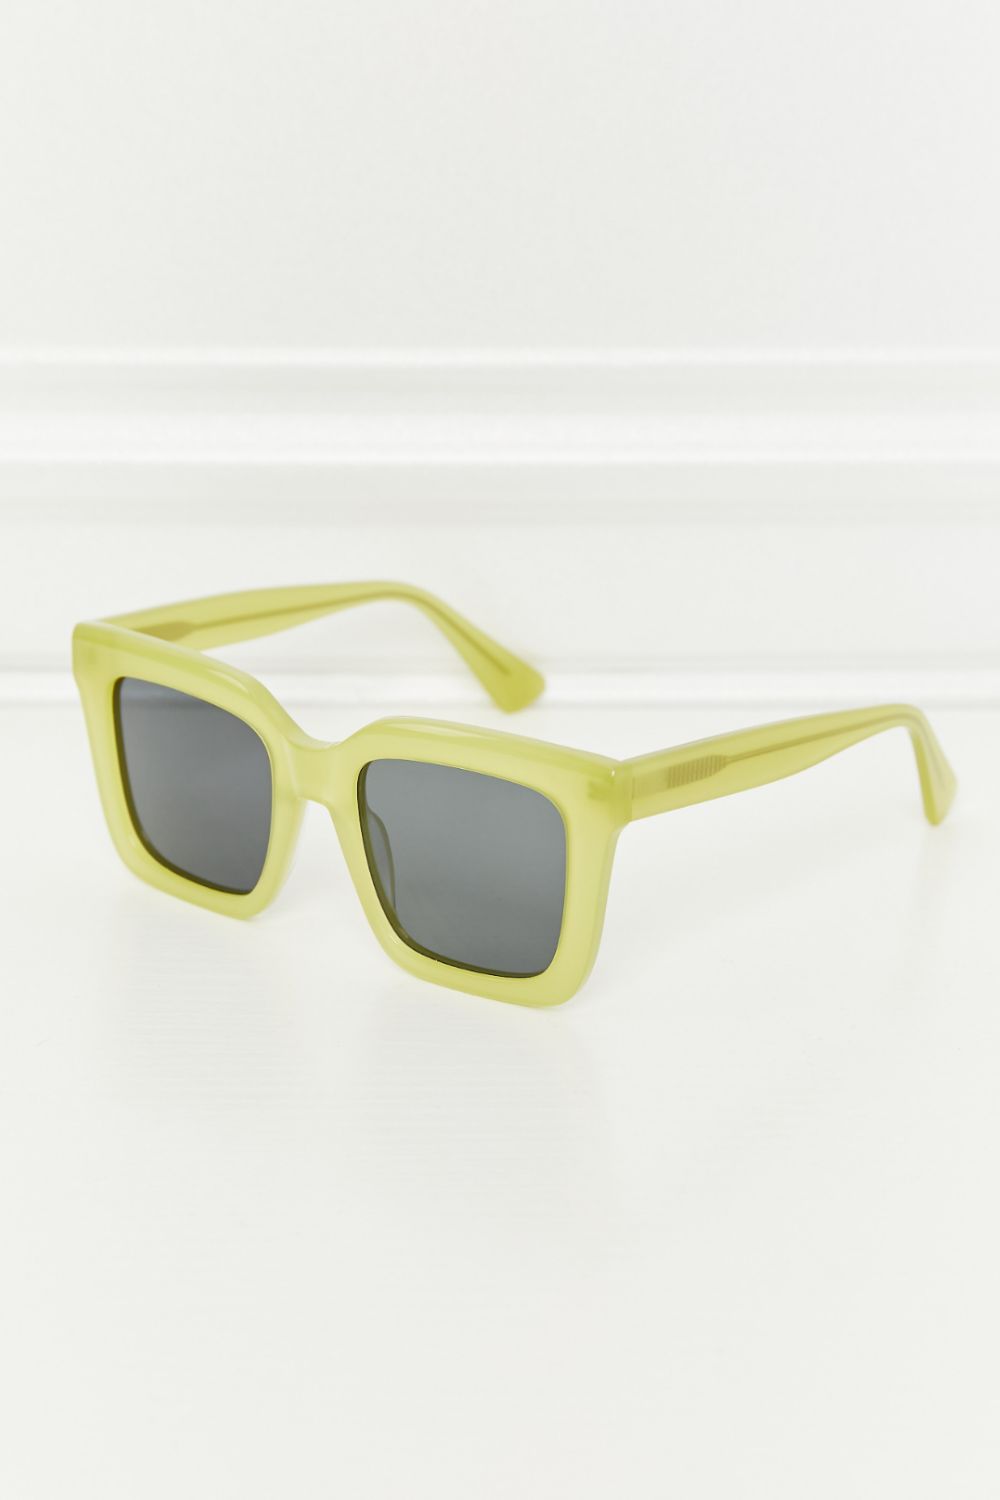 Square TAC Polarization Lens Sunglasses Lemon One Size Sunglasses by Vim&Vigor | Vim&Vigor Boutique